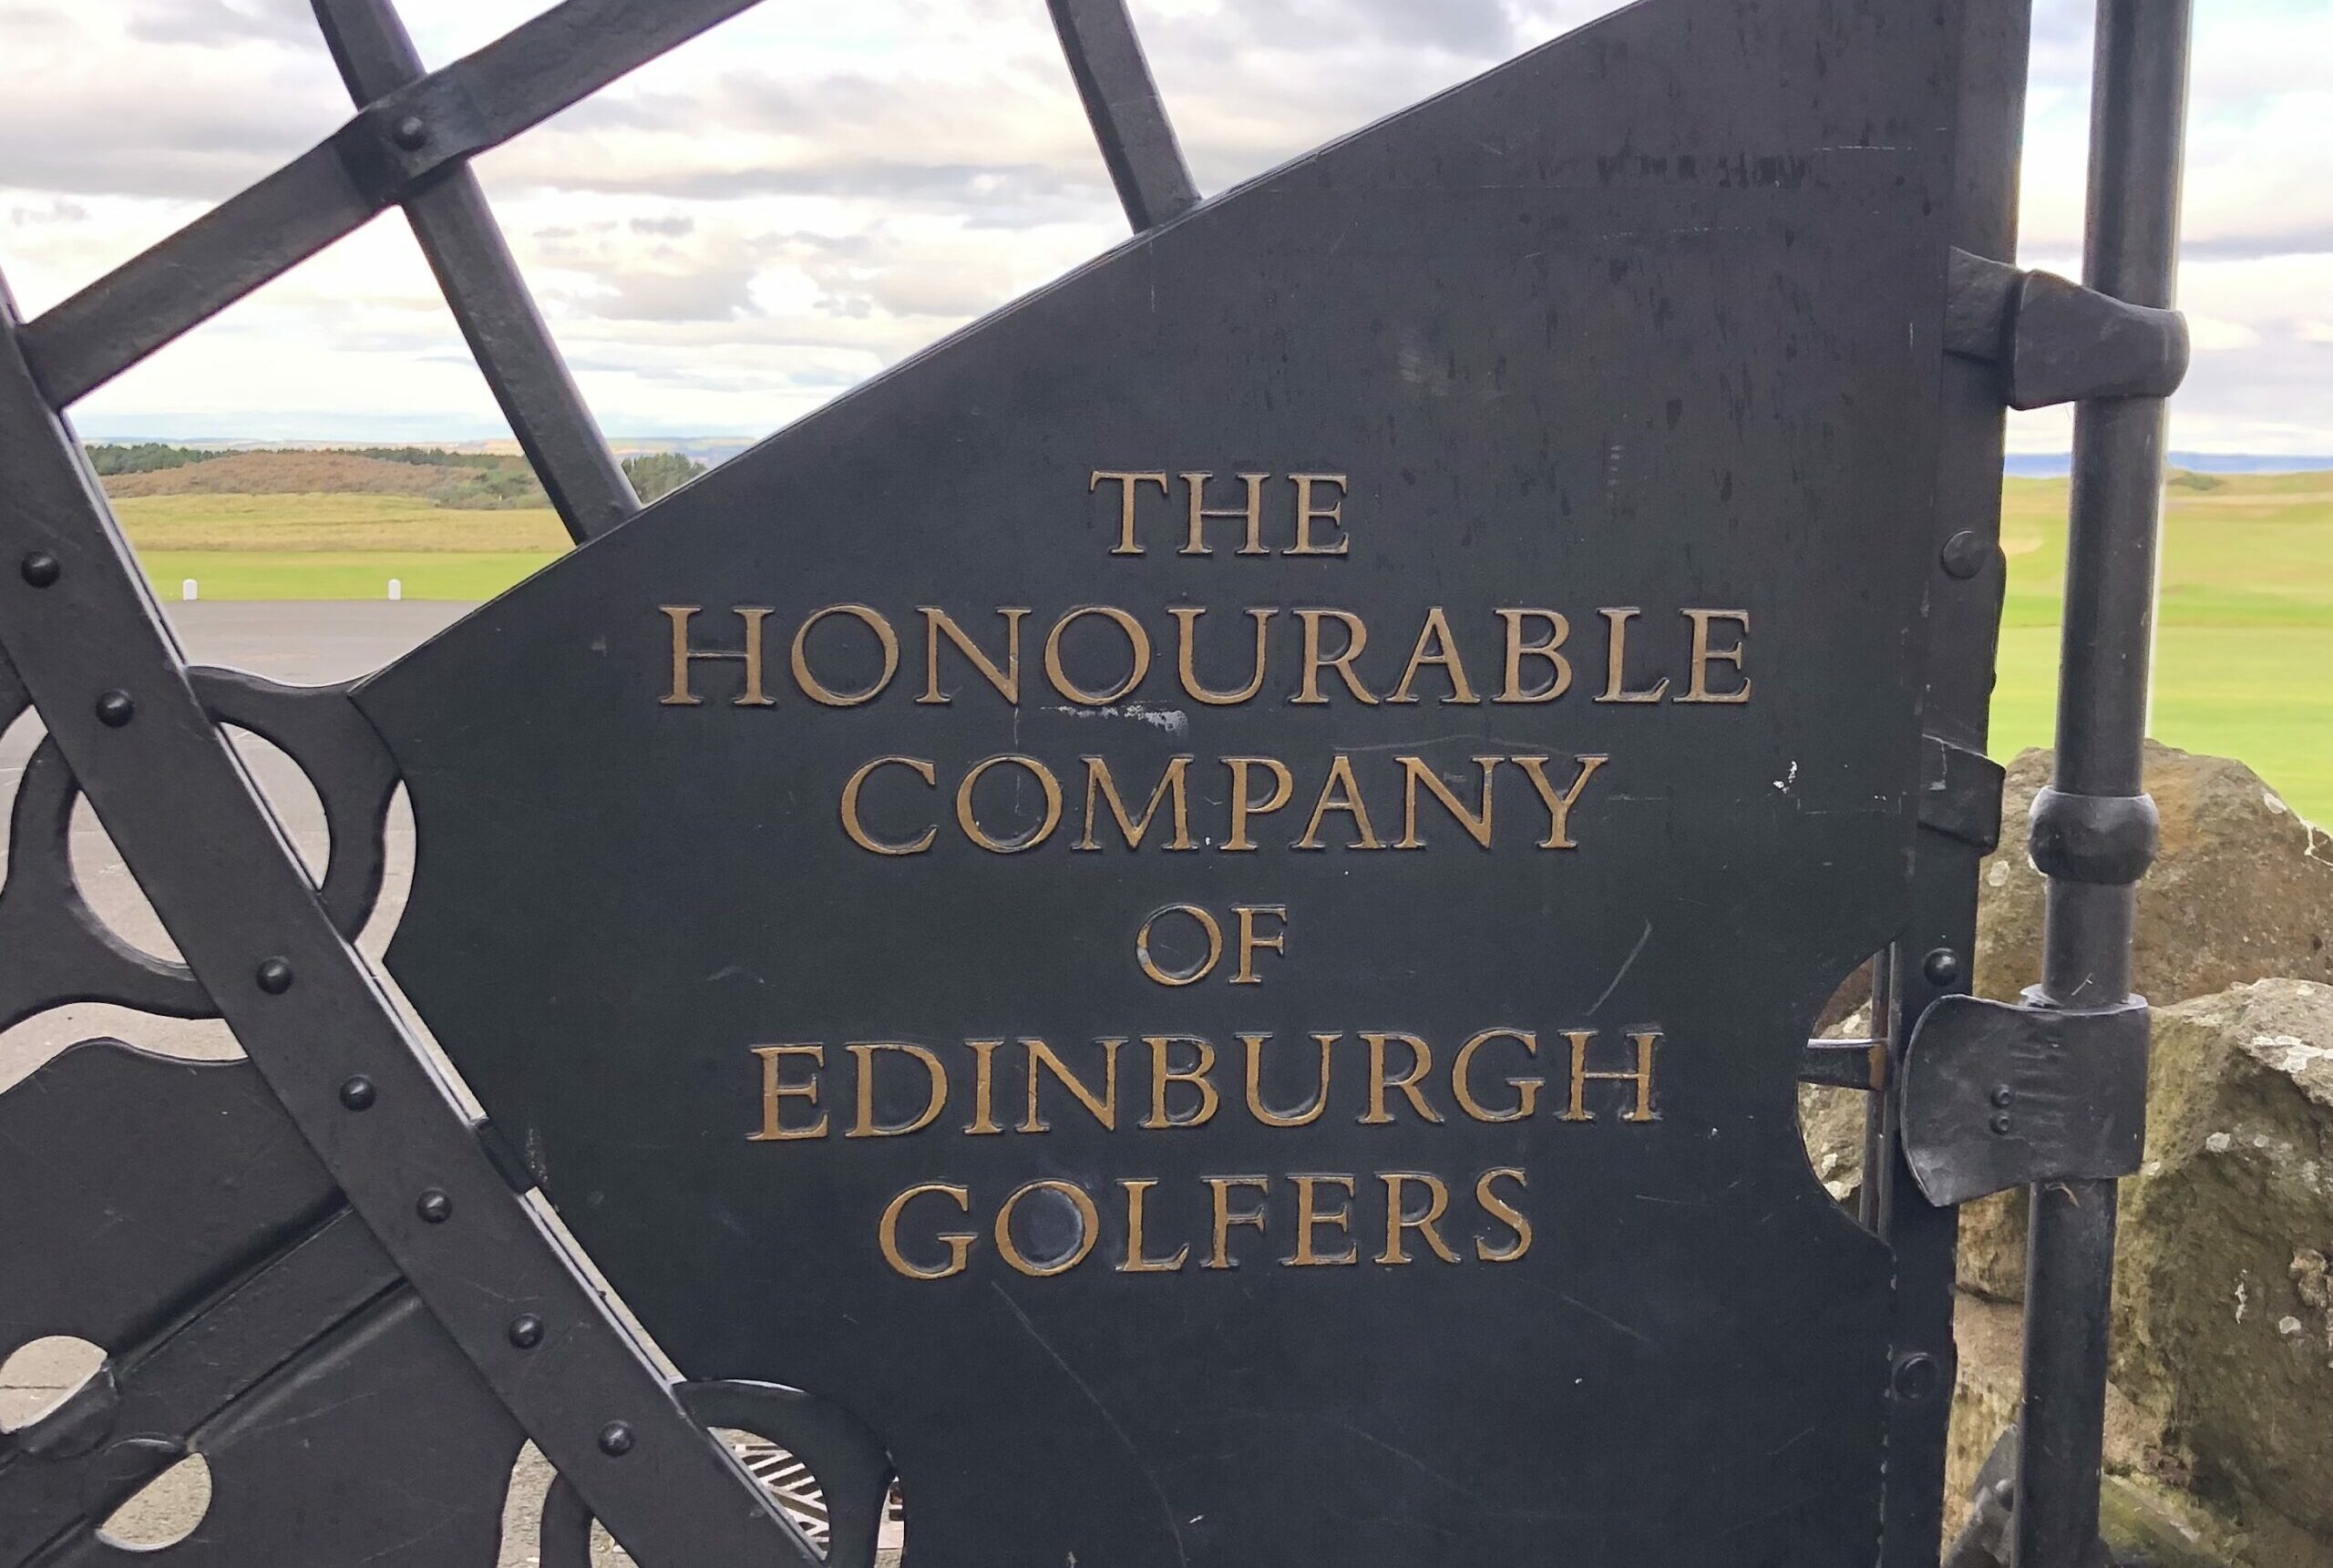 The gates to Muirfield- home to "The Honourable Company of Edinburgh Golfers"